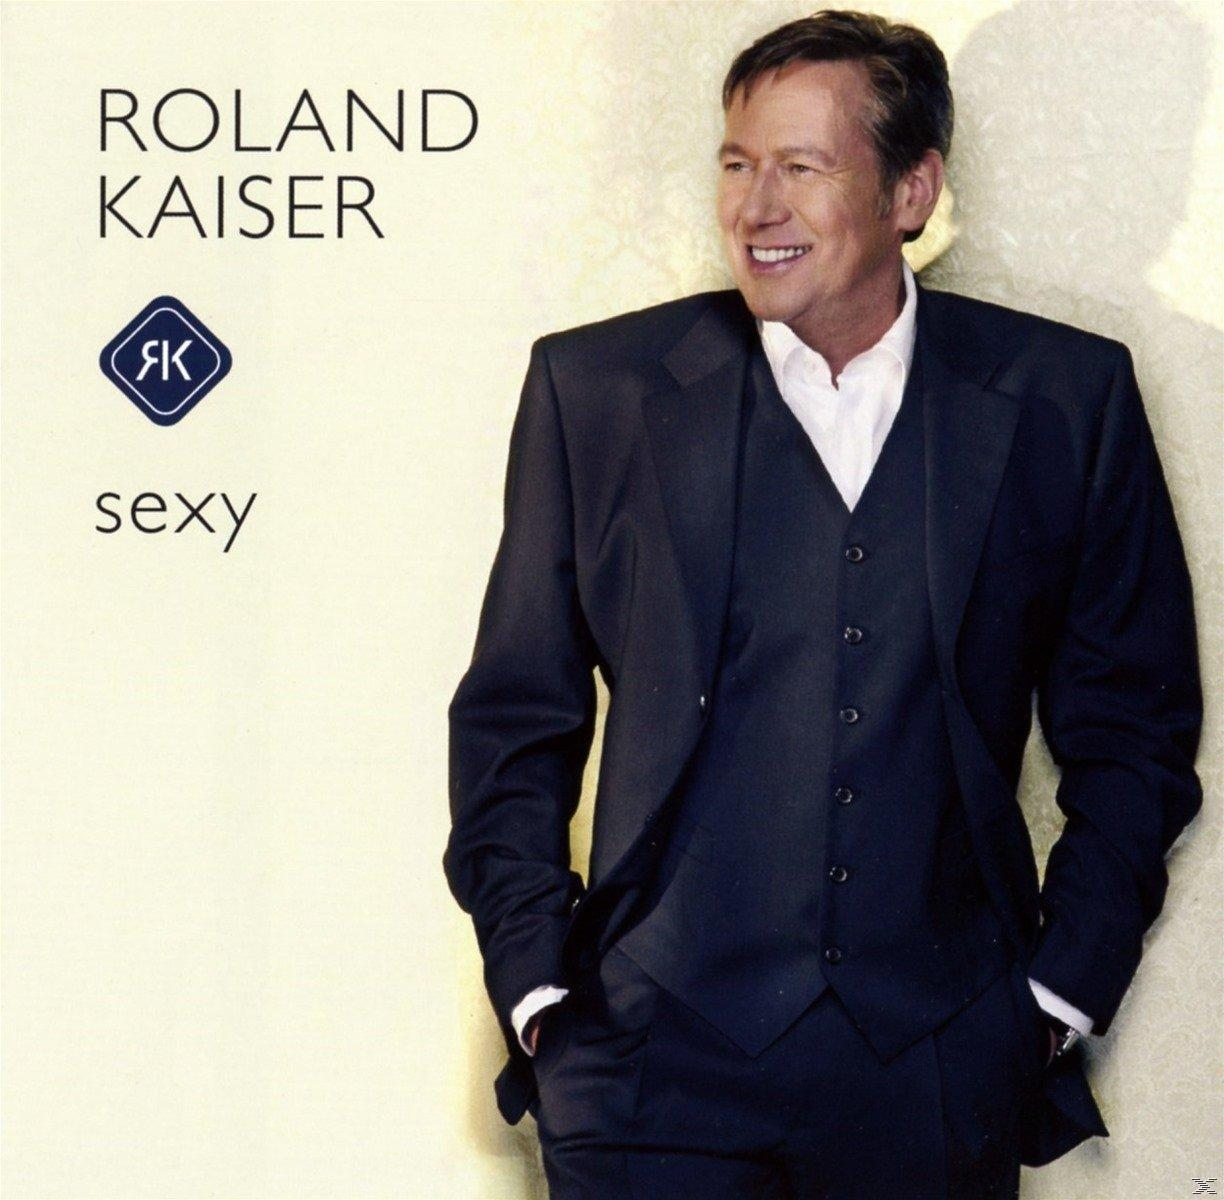 Kaiser (CD) - Roland - Sexy